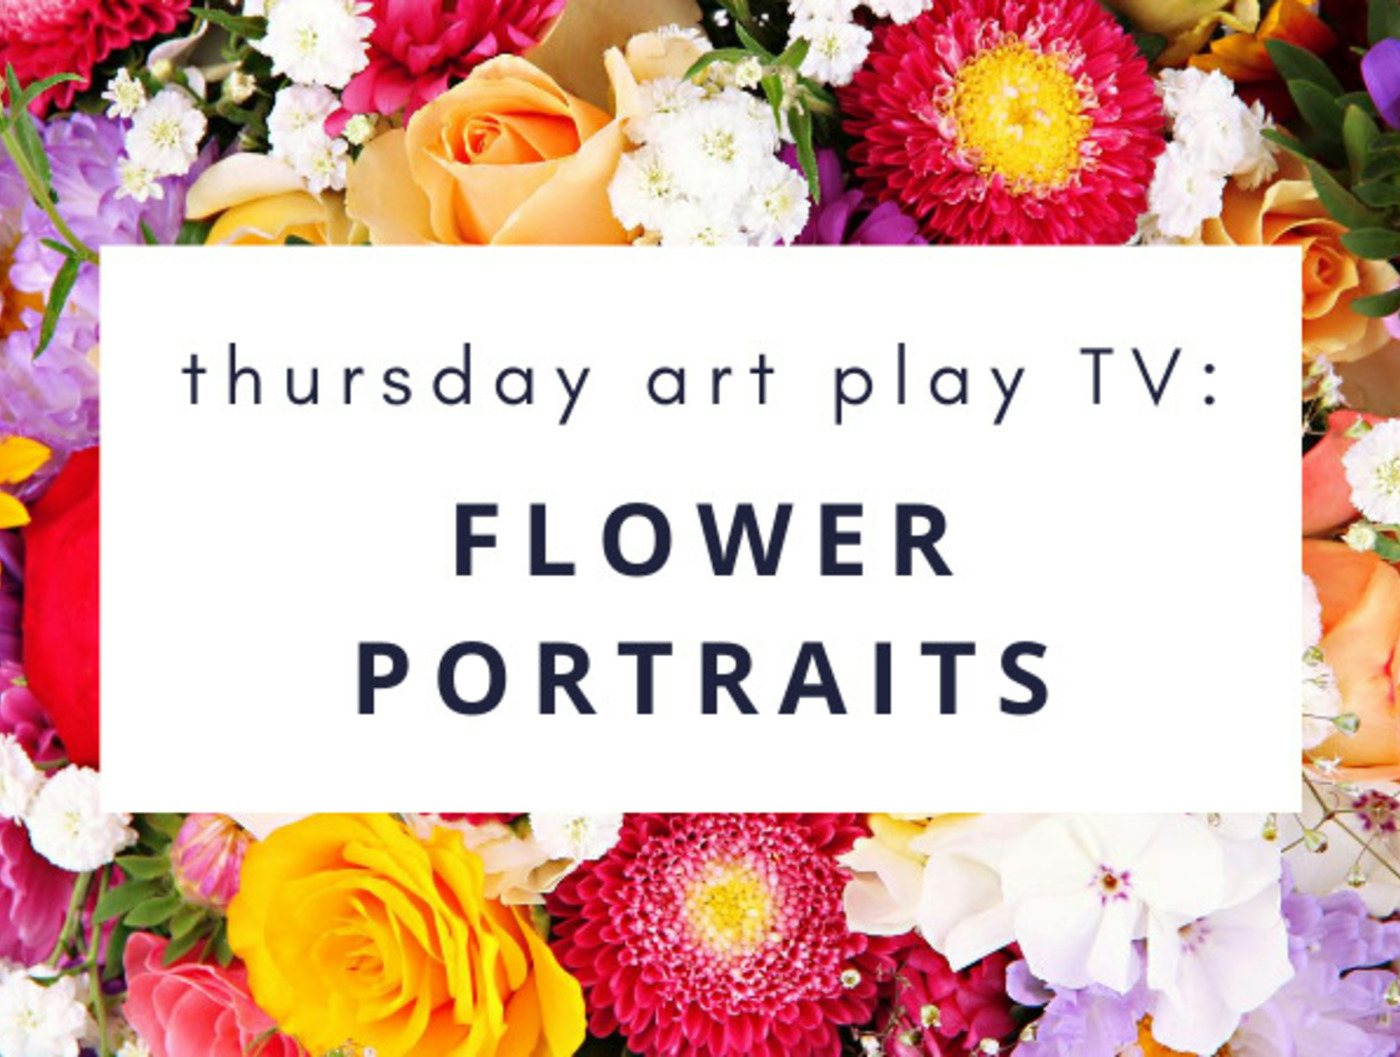 Thursday Art Play TV: Flower Portraits